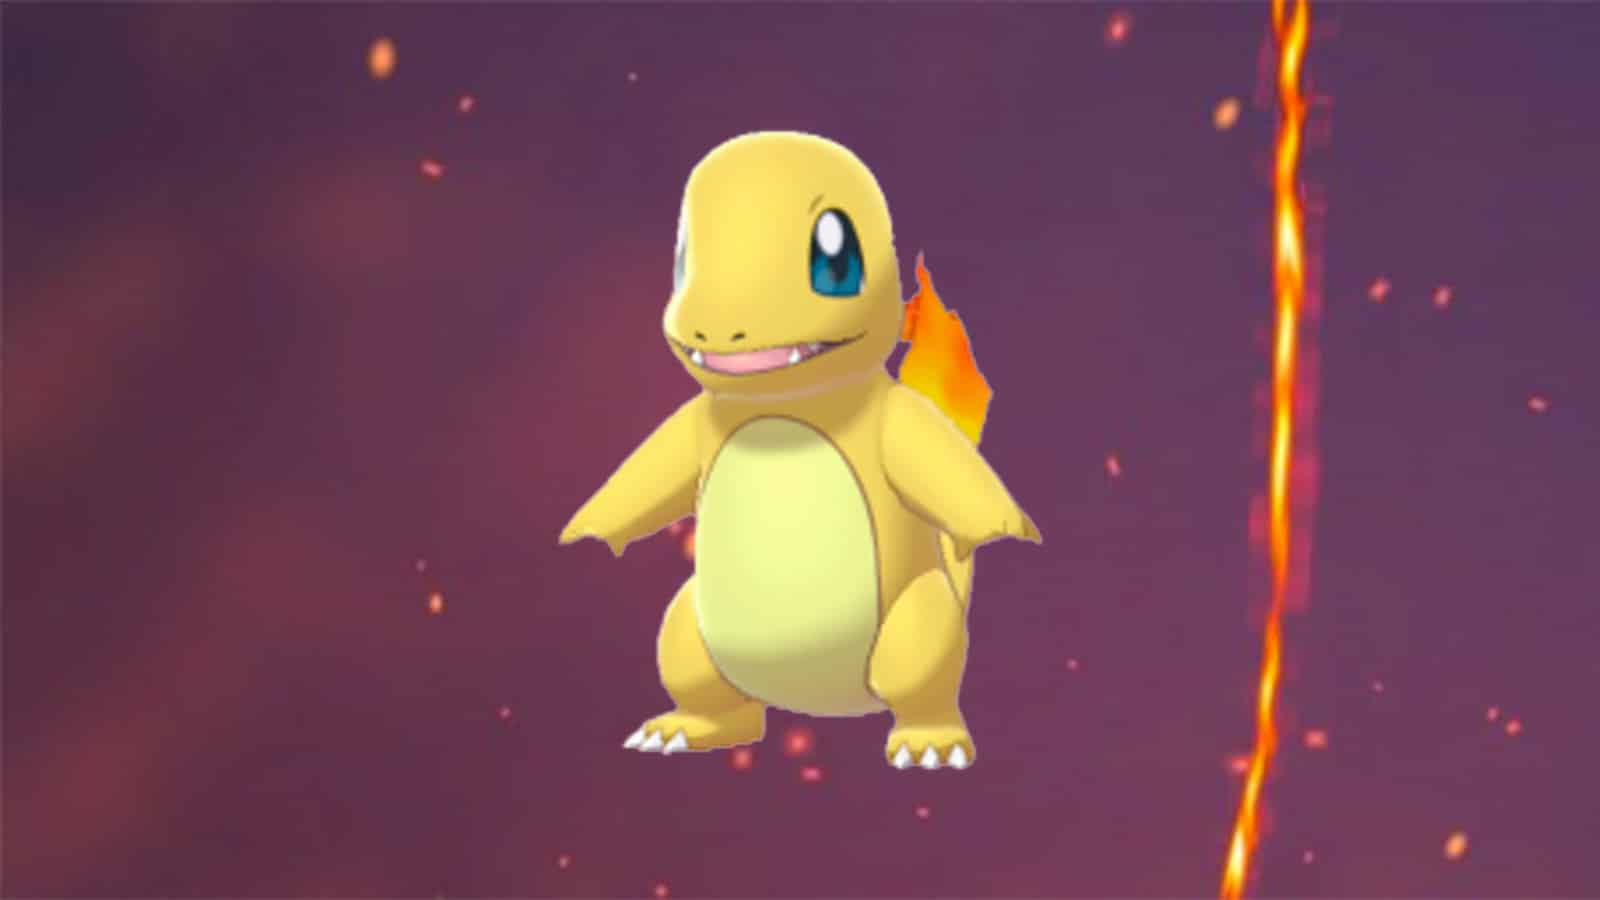 An image of Shiny Charmander in Pokemon Go